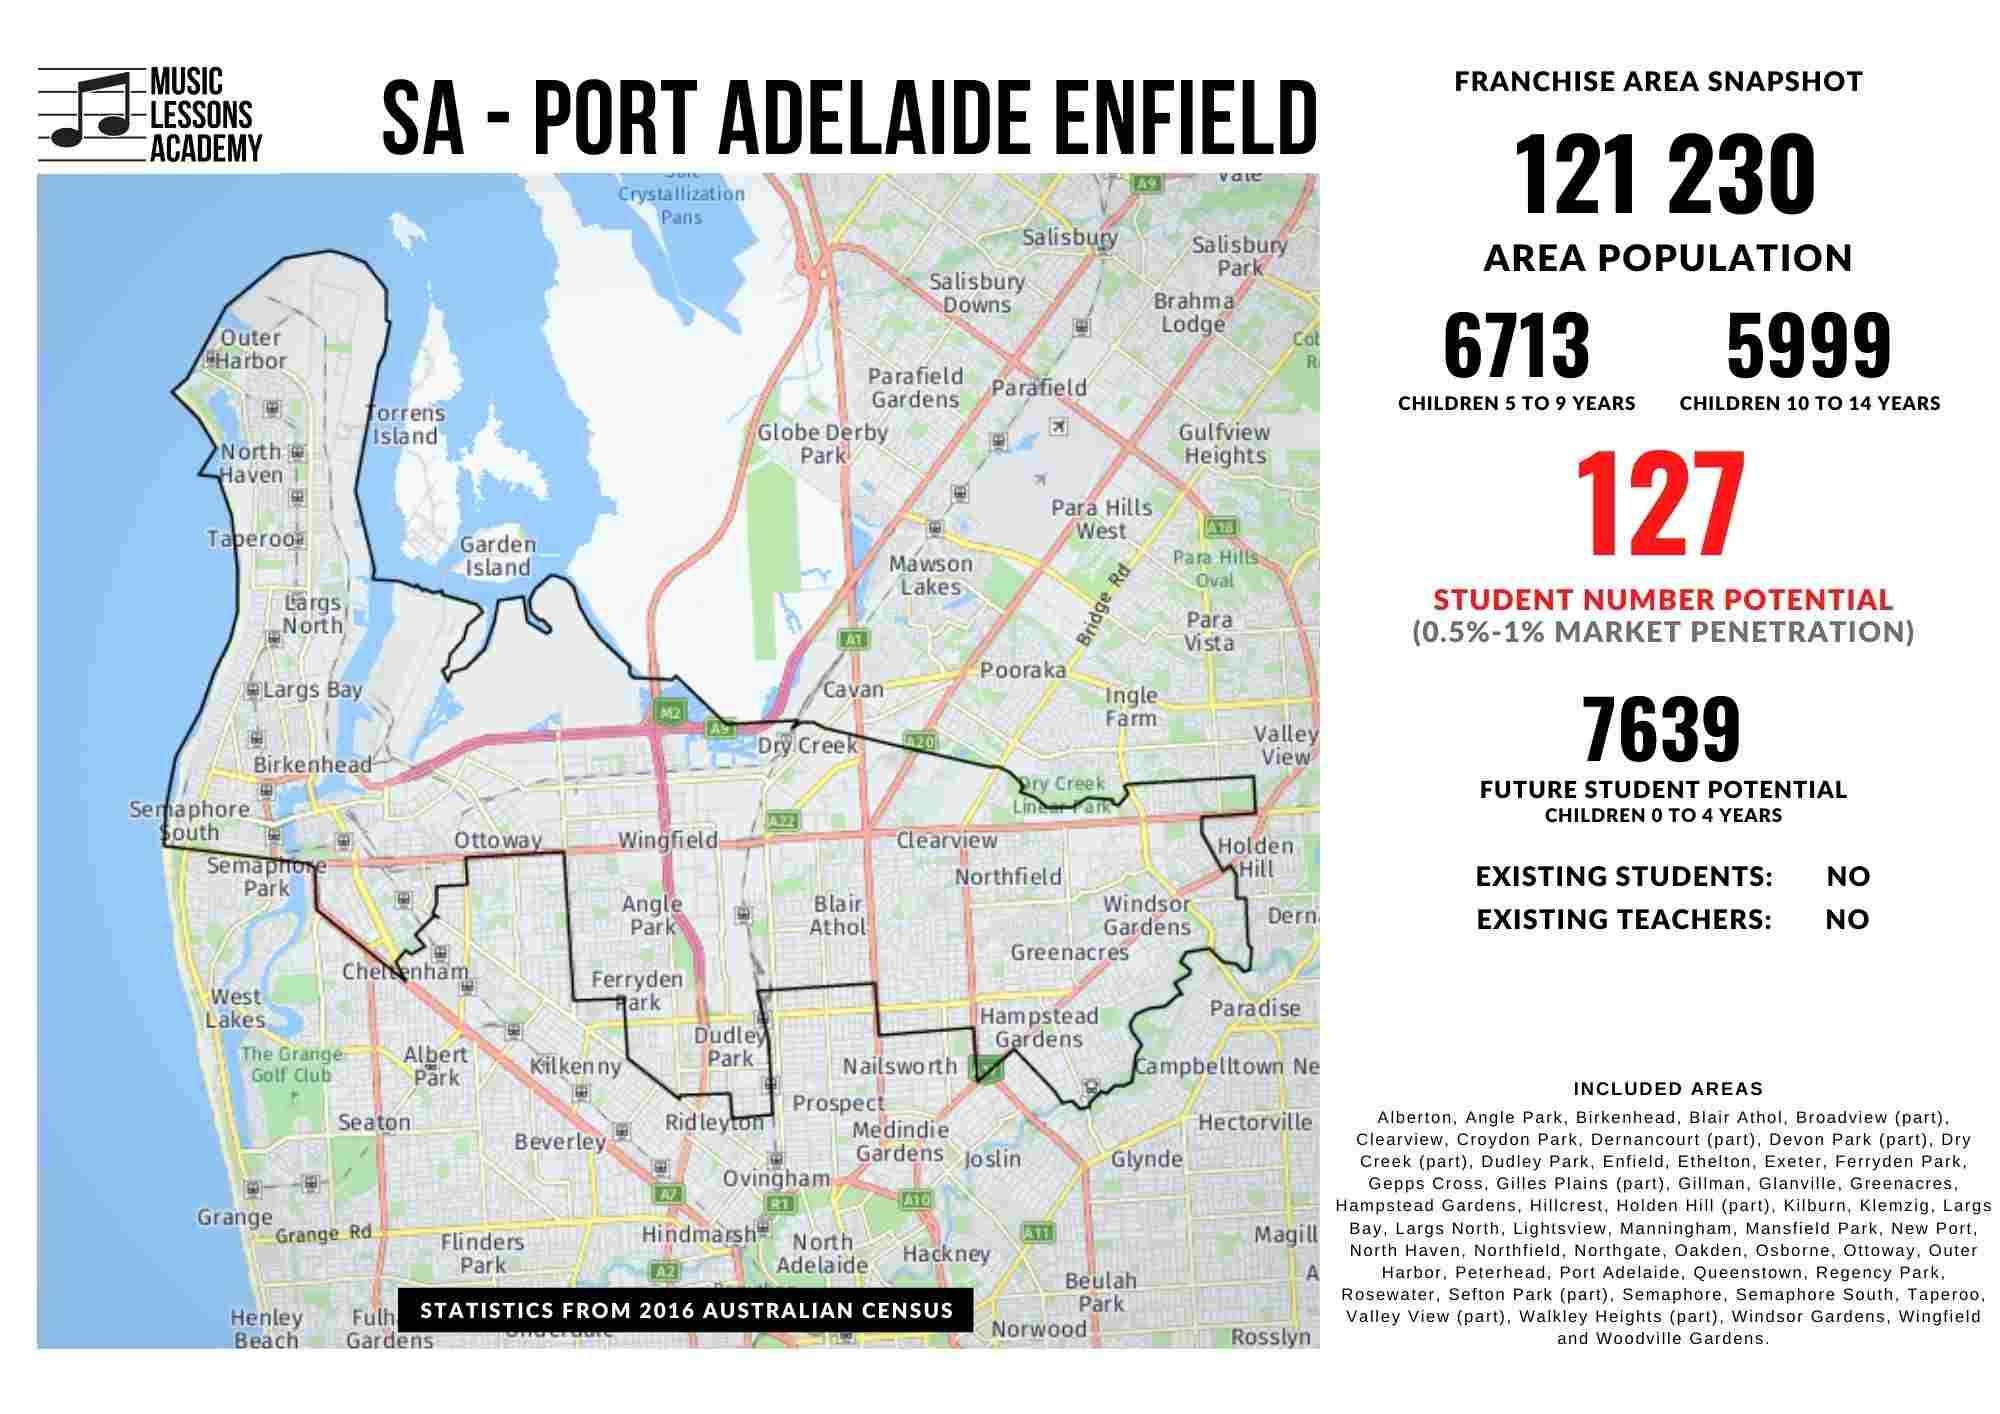 SA Port Adelaide Enfield Franchise for sale